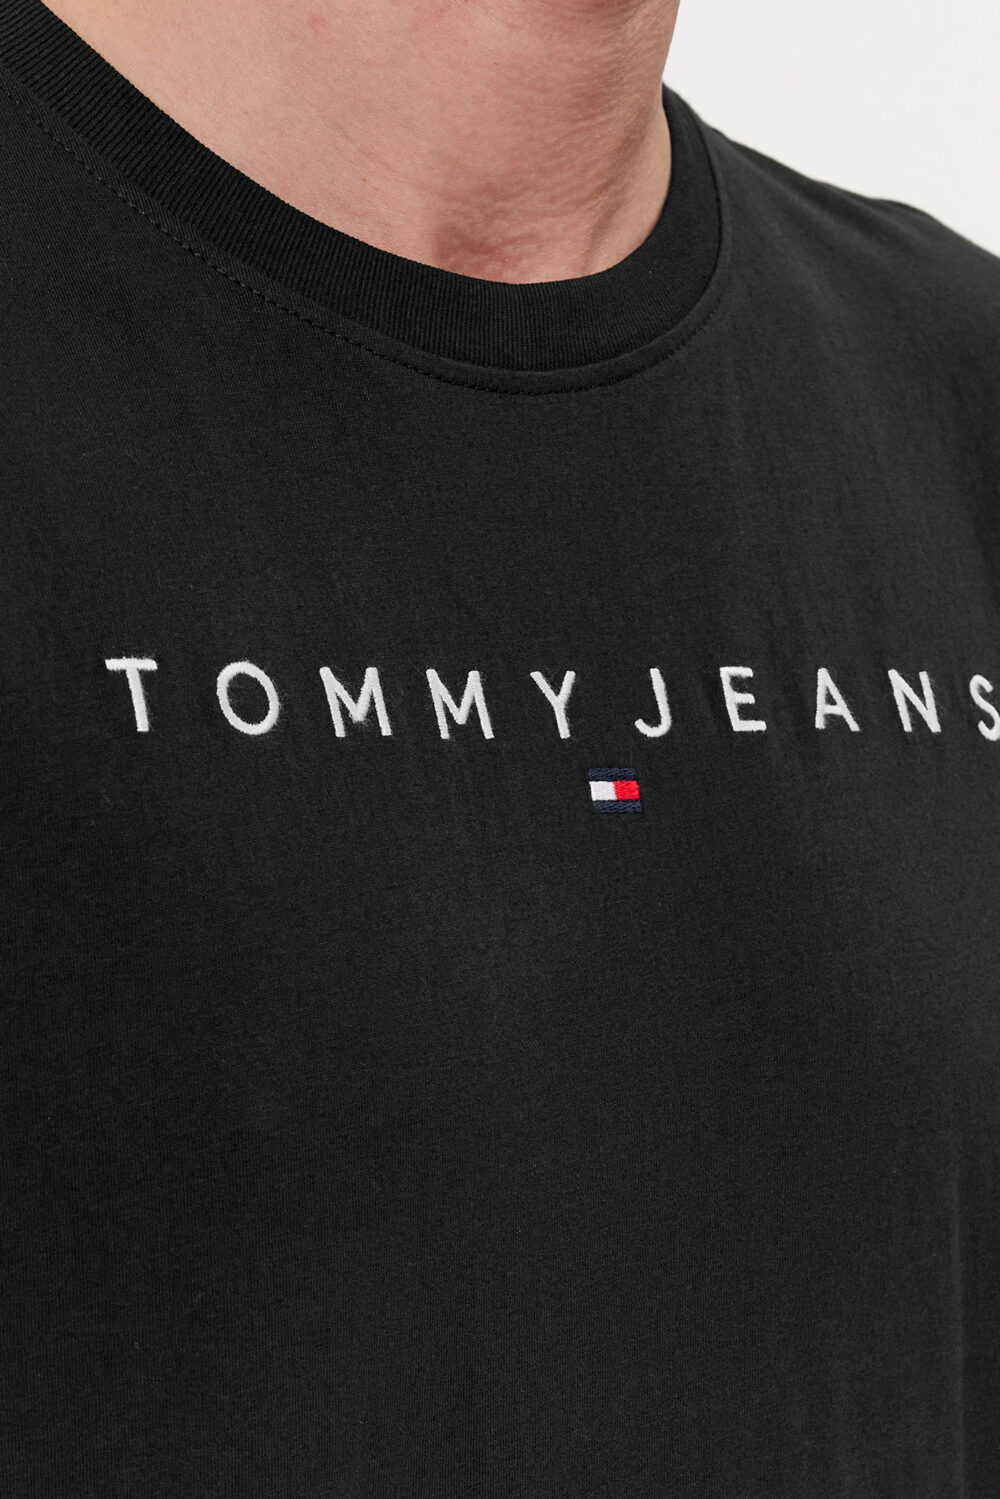 T-shirt Tommy Hilfiger Jeans REG LINEAR LOGO Nero - Foto 2